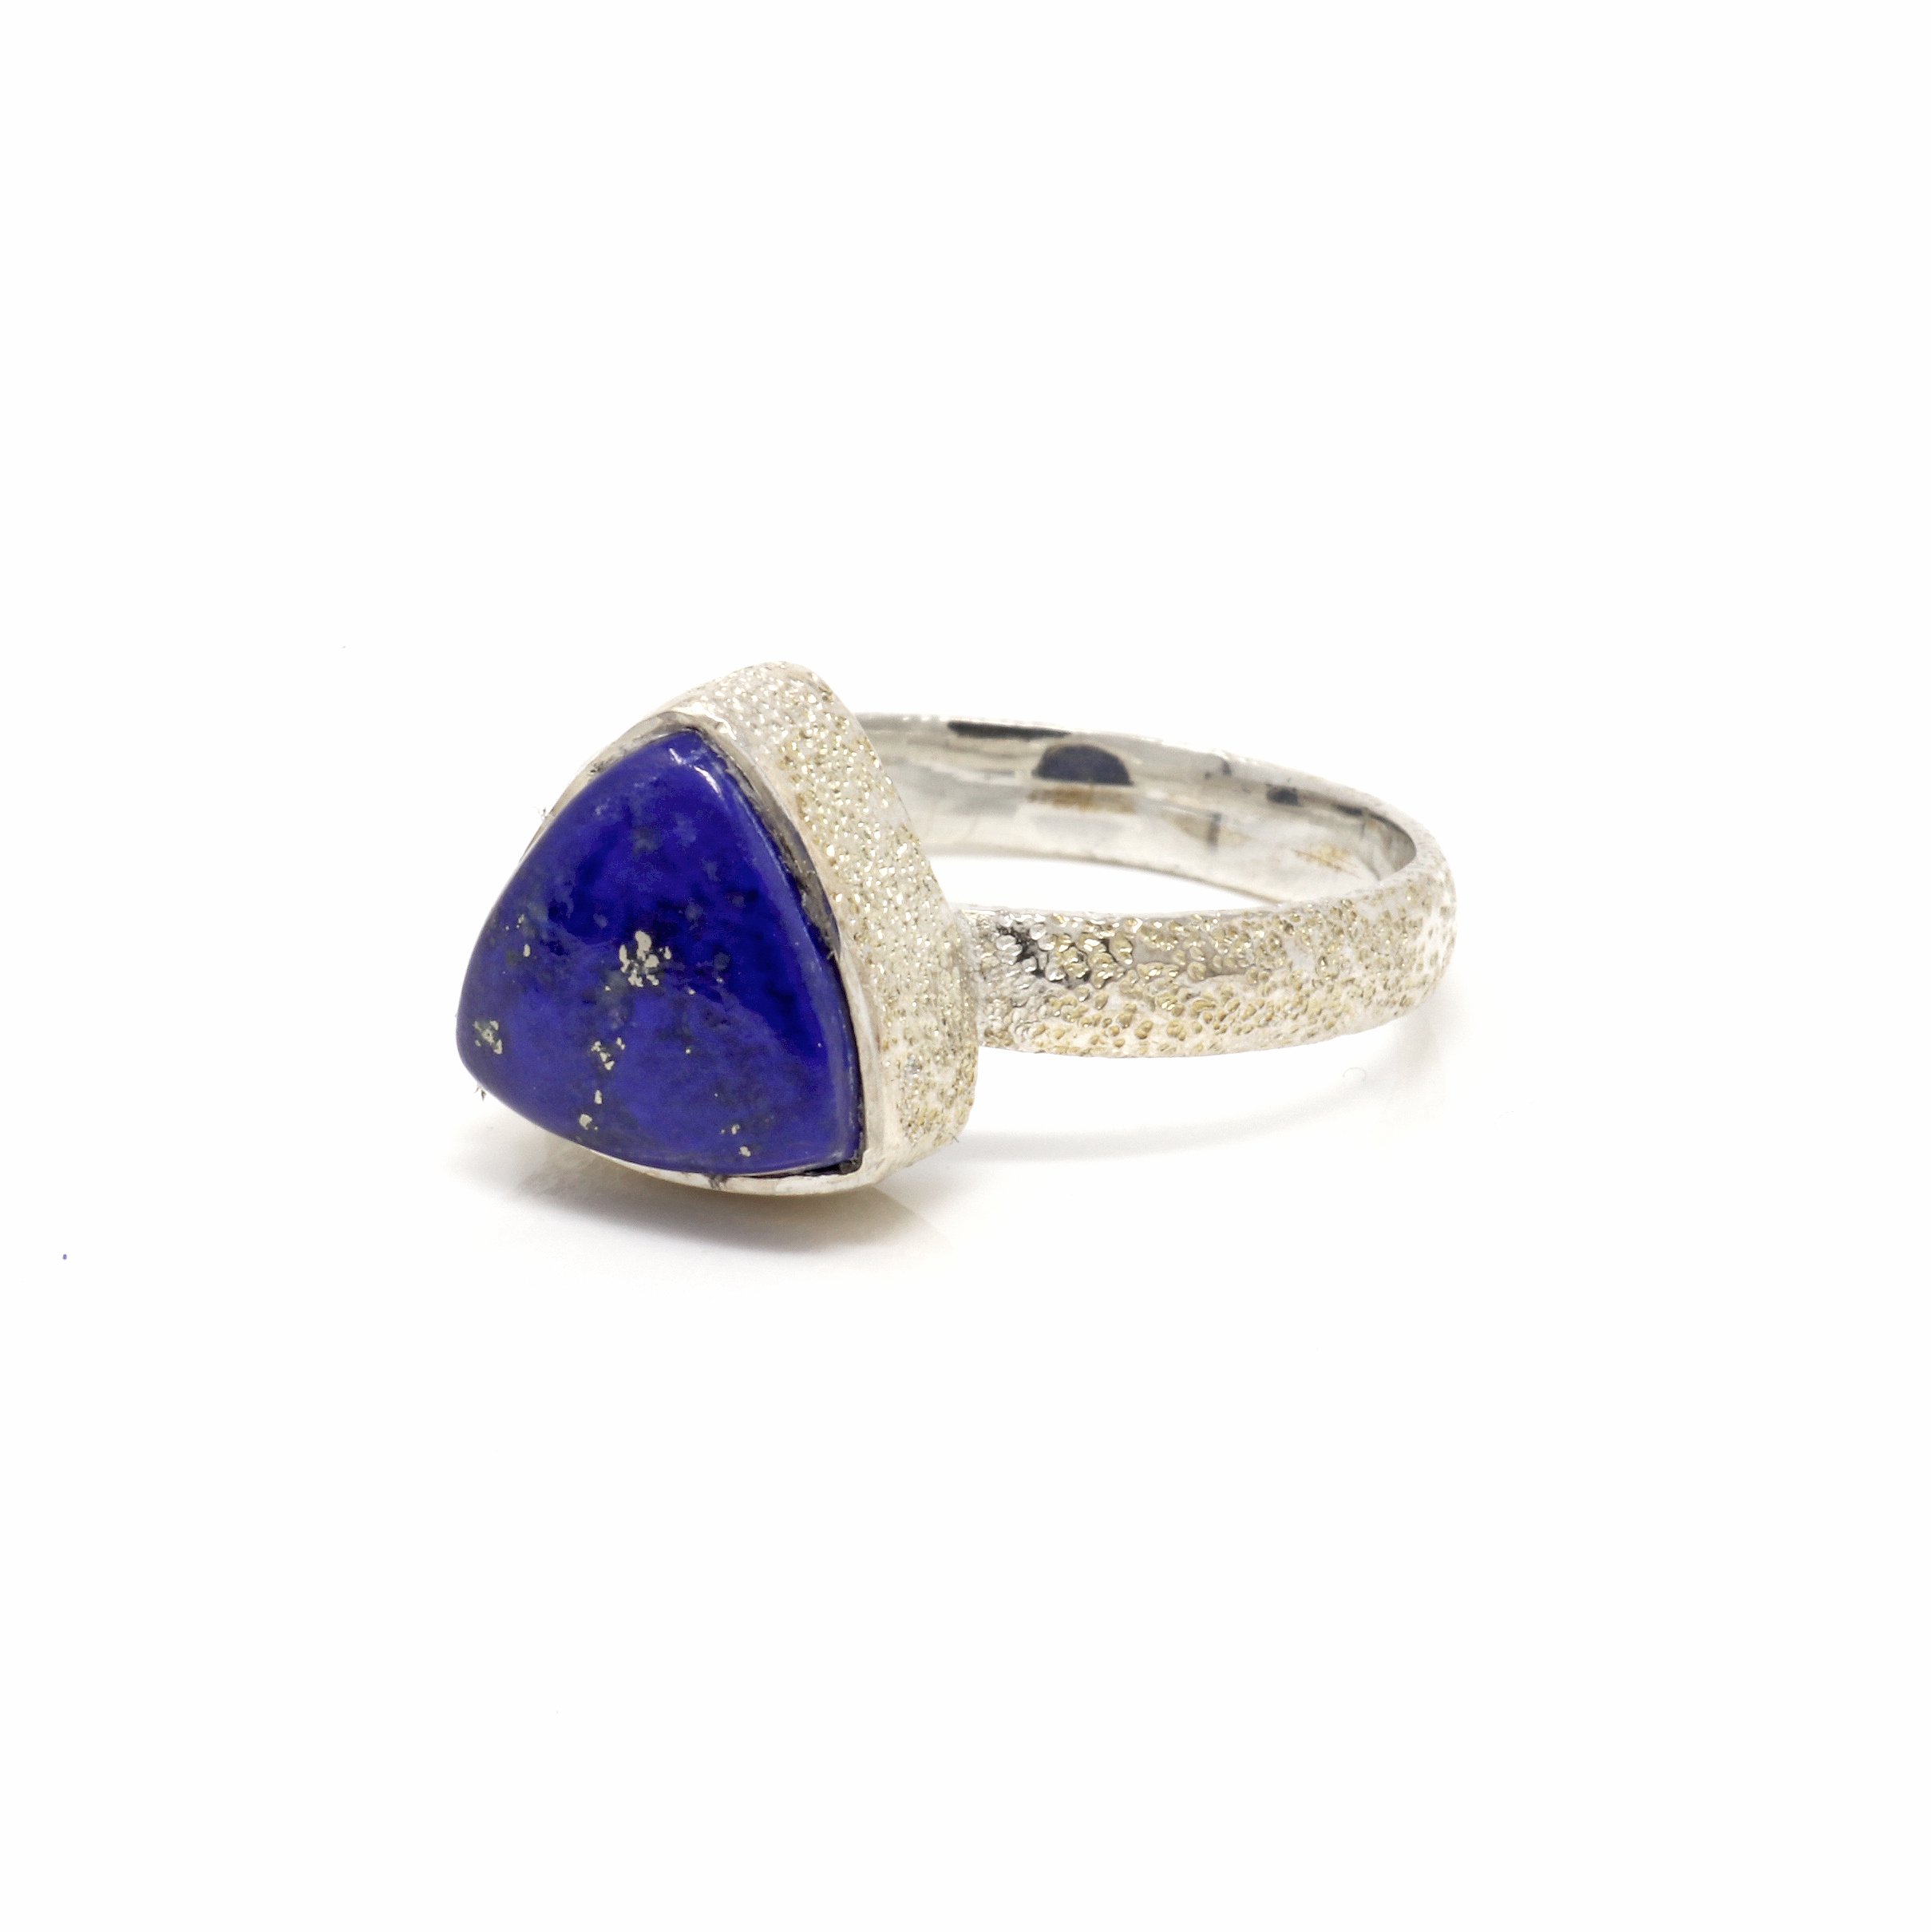 Lapis Lazuli Ring Size 9 -Triangle